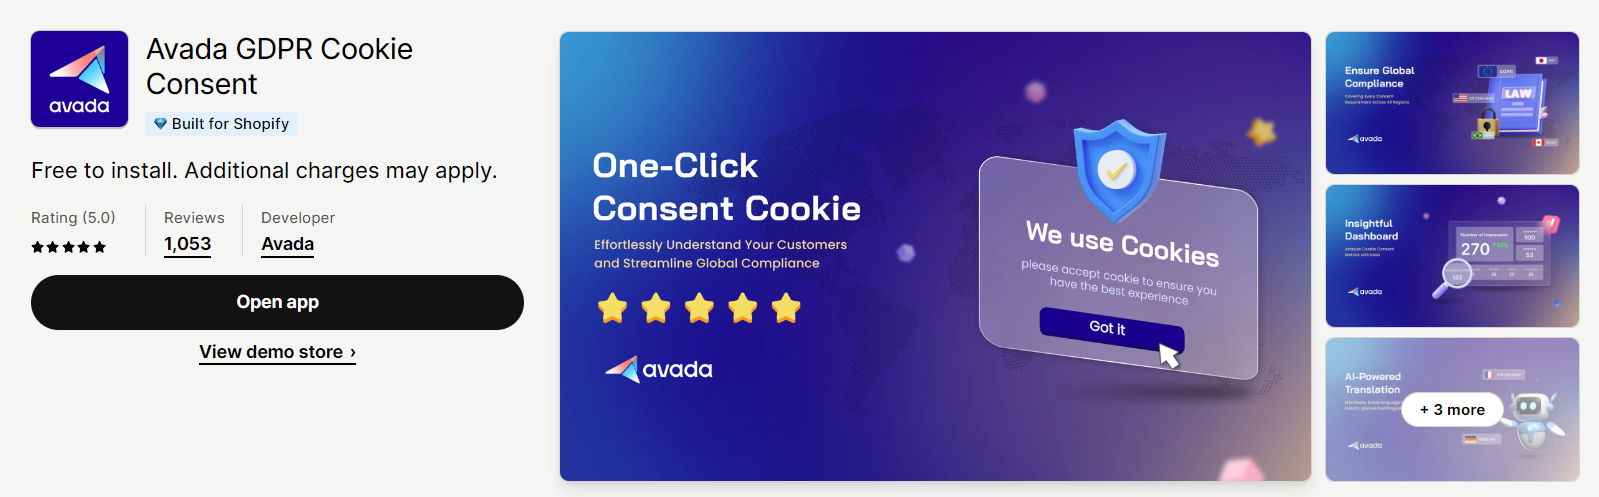 Avada Cookie Consent